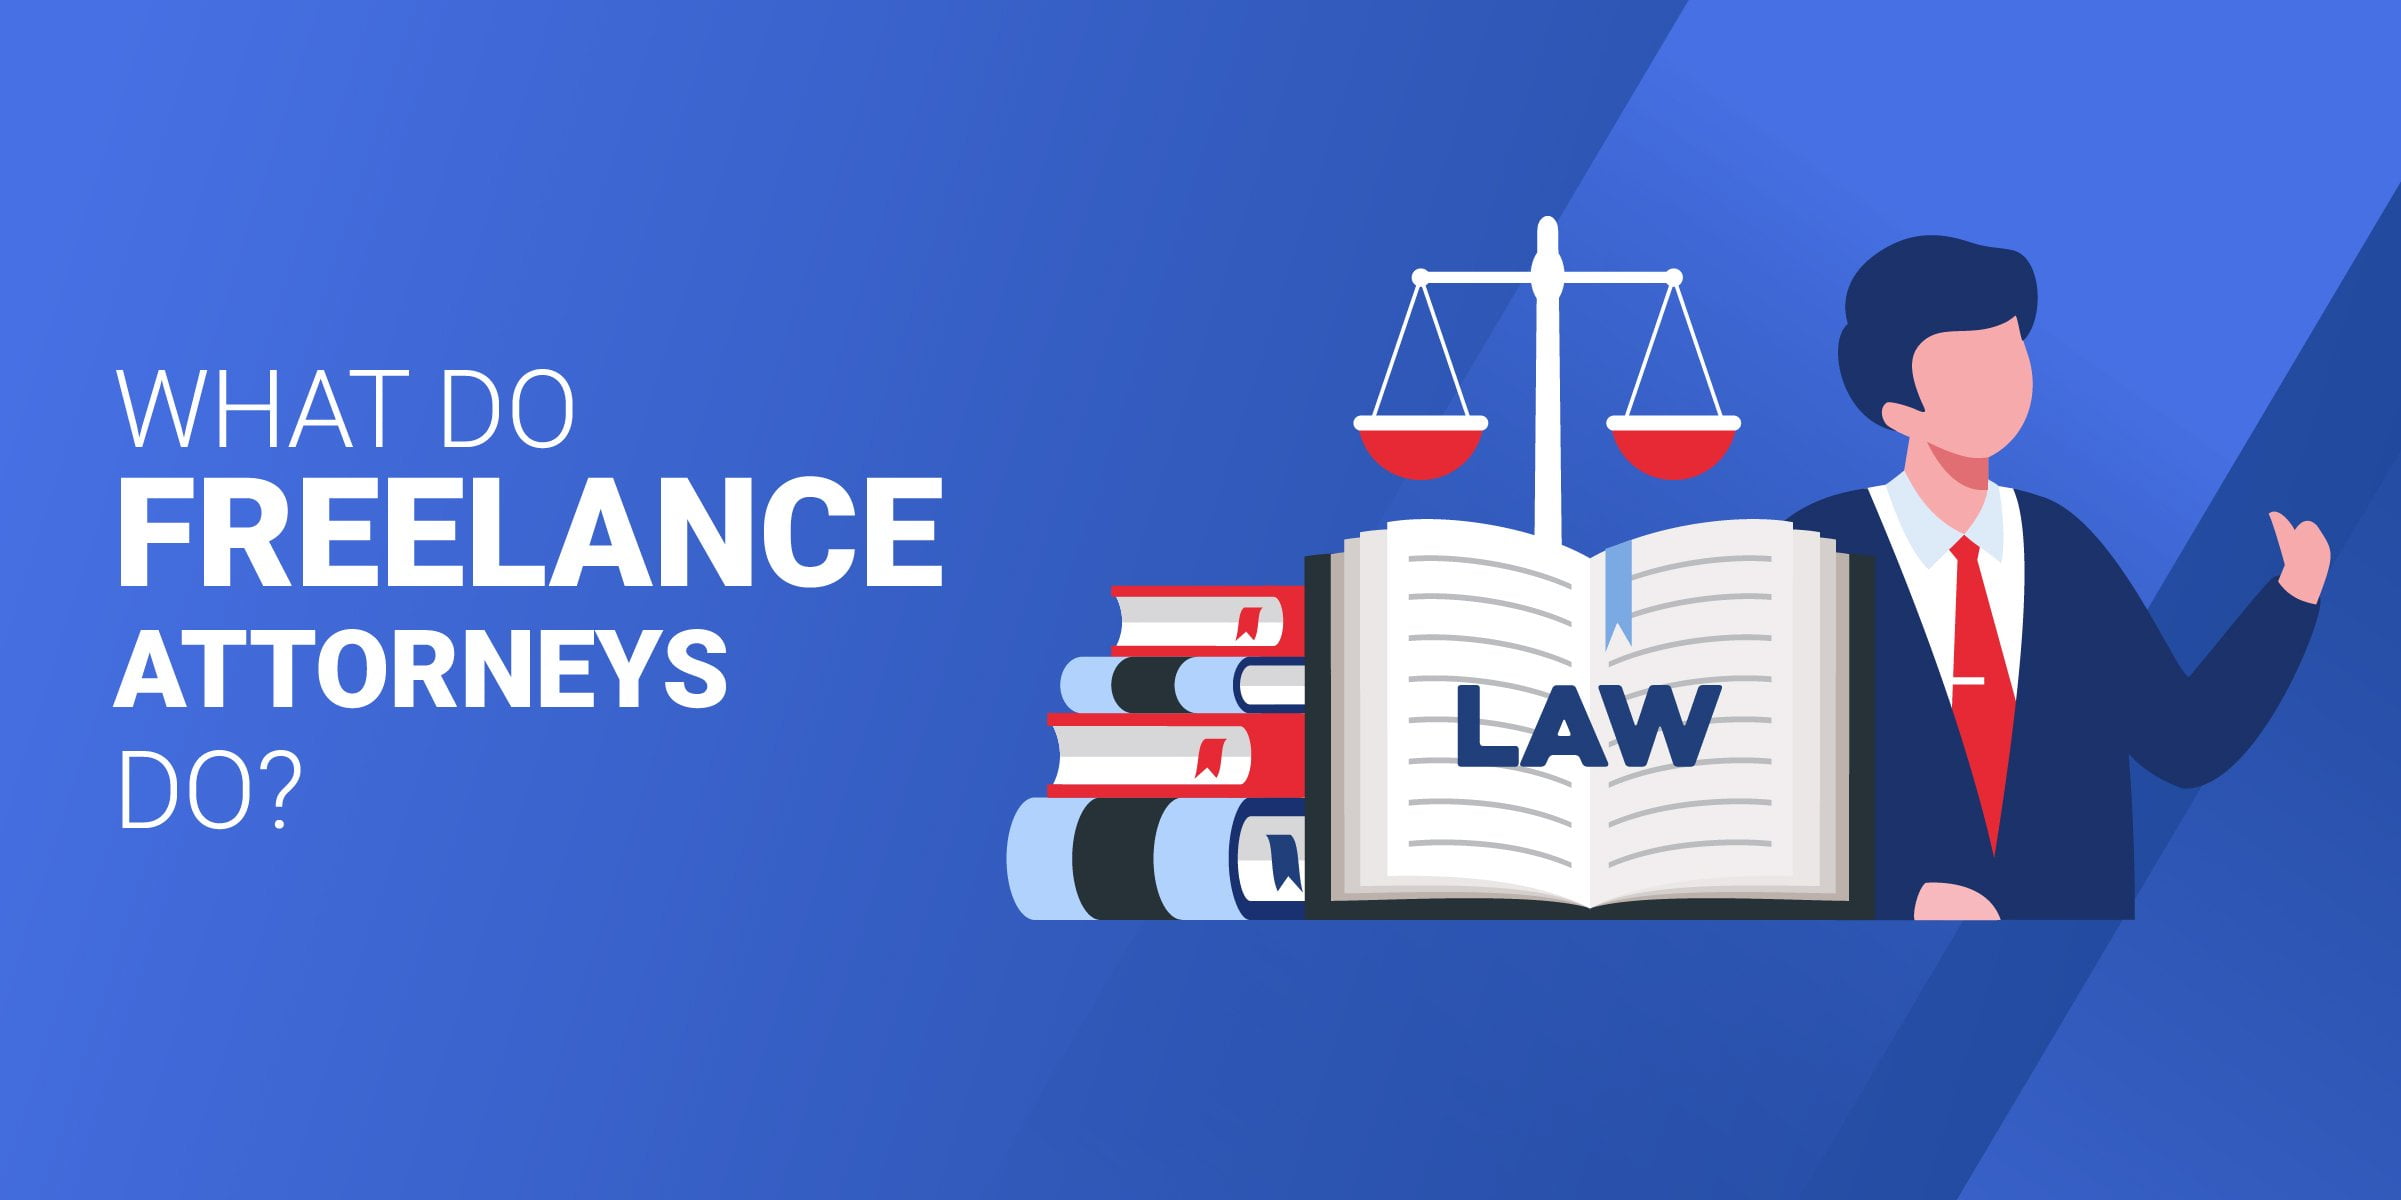 What Do Freelance Attorneys Do